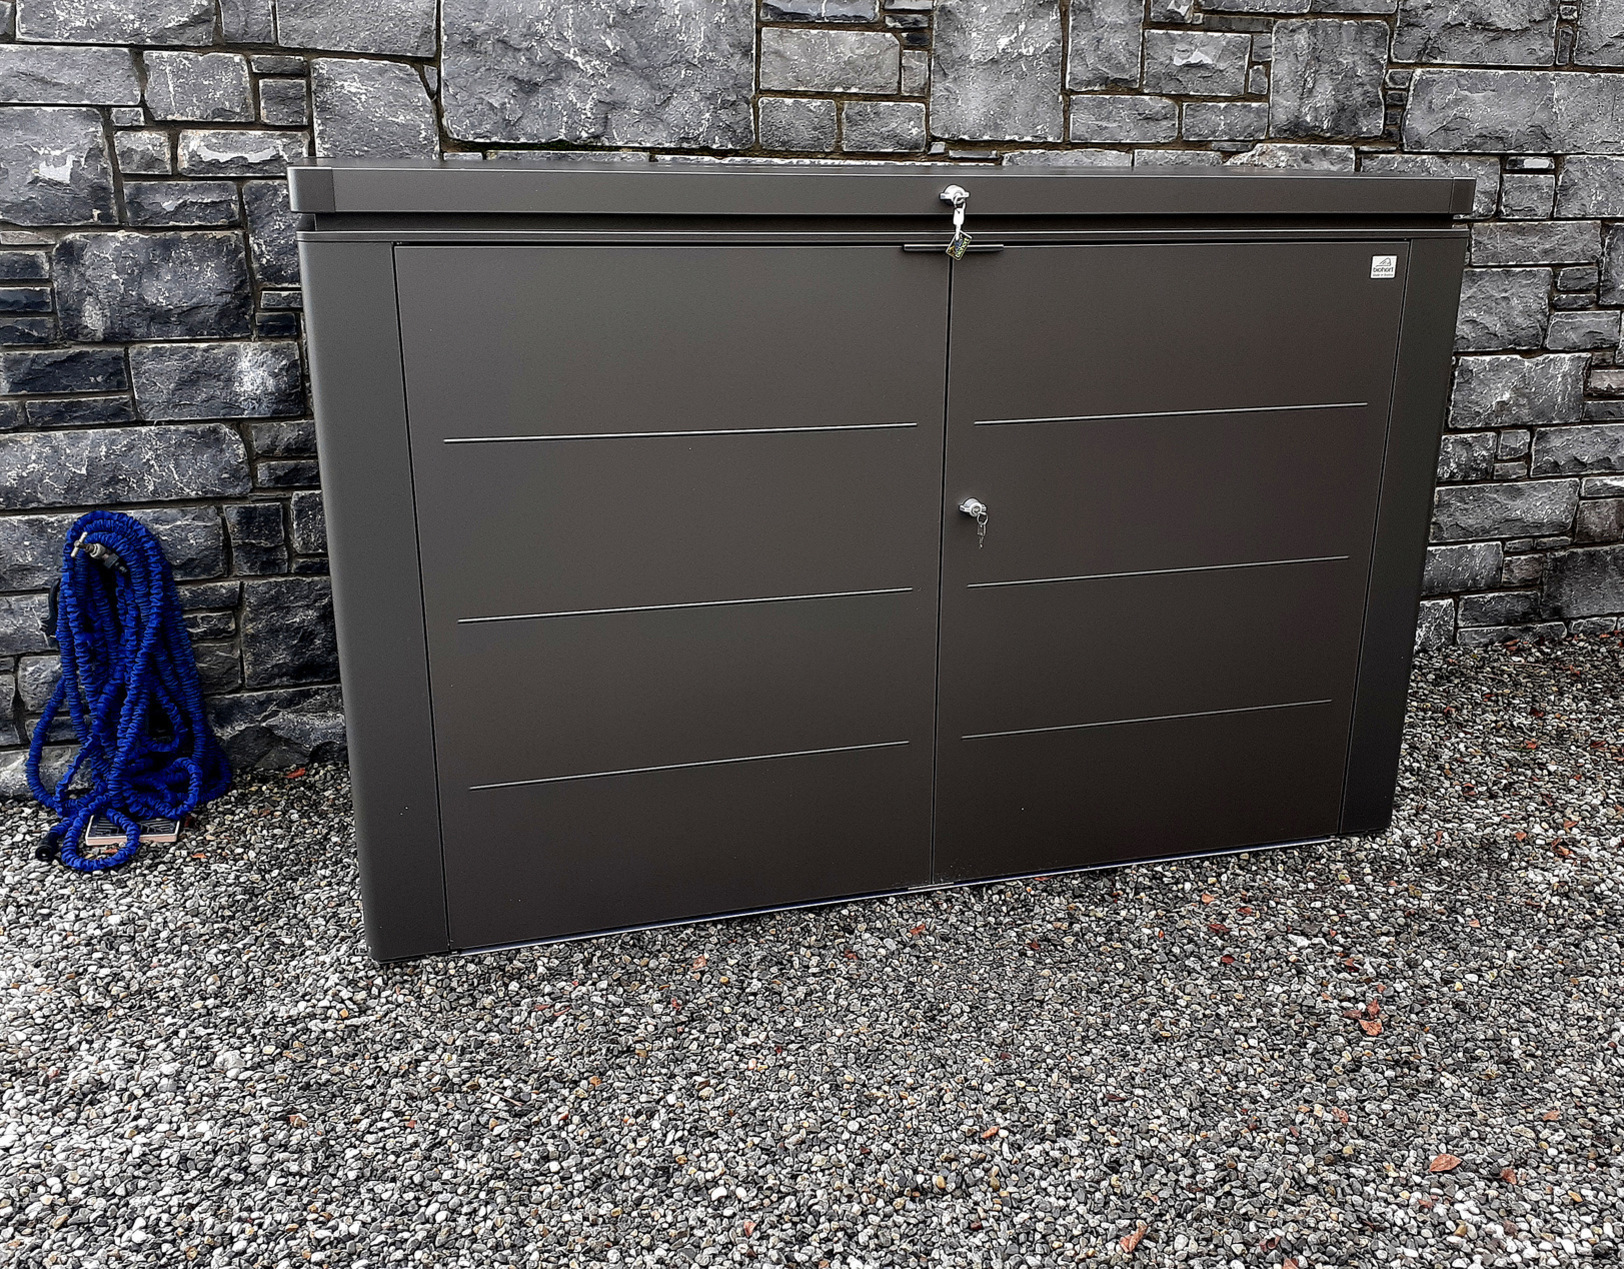 Biohort HighBoard 200 Bike Storage Unit in metallic dark grey - supplied + fitted in Skerries, Co Dublin.